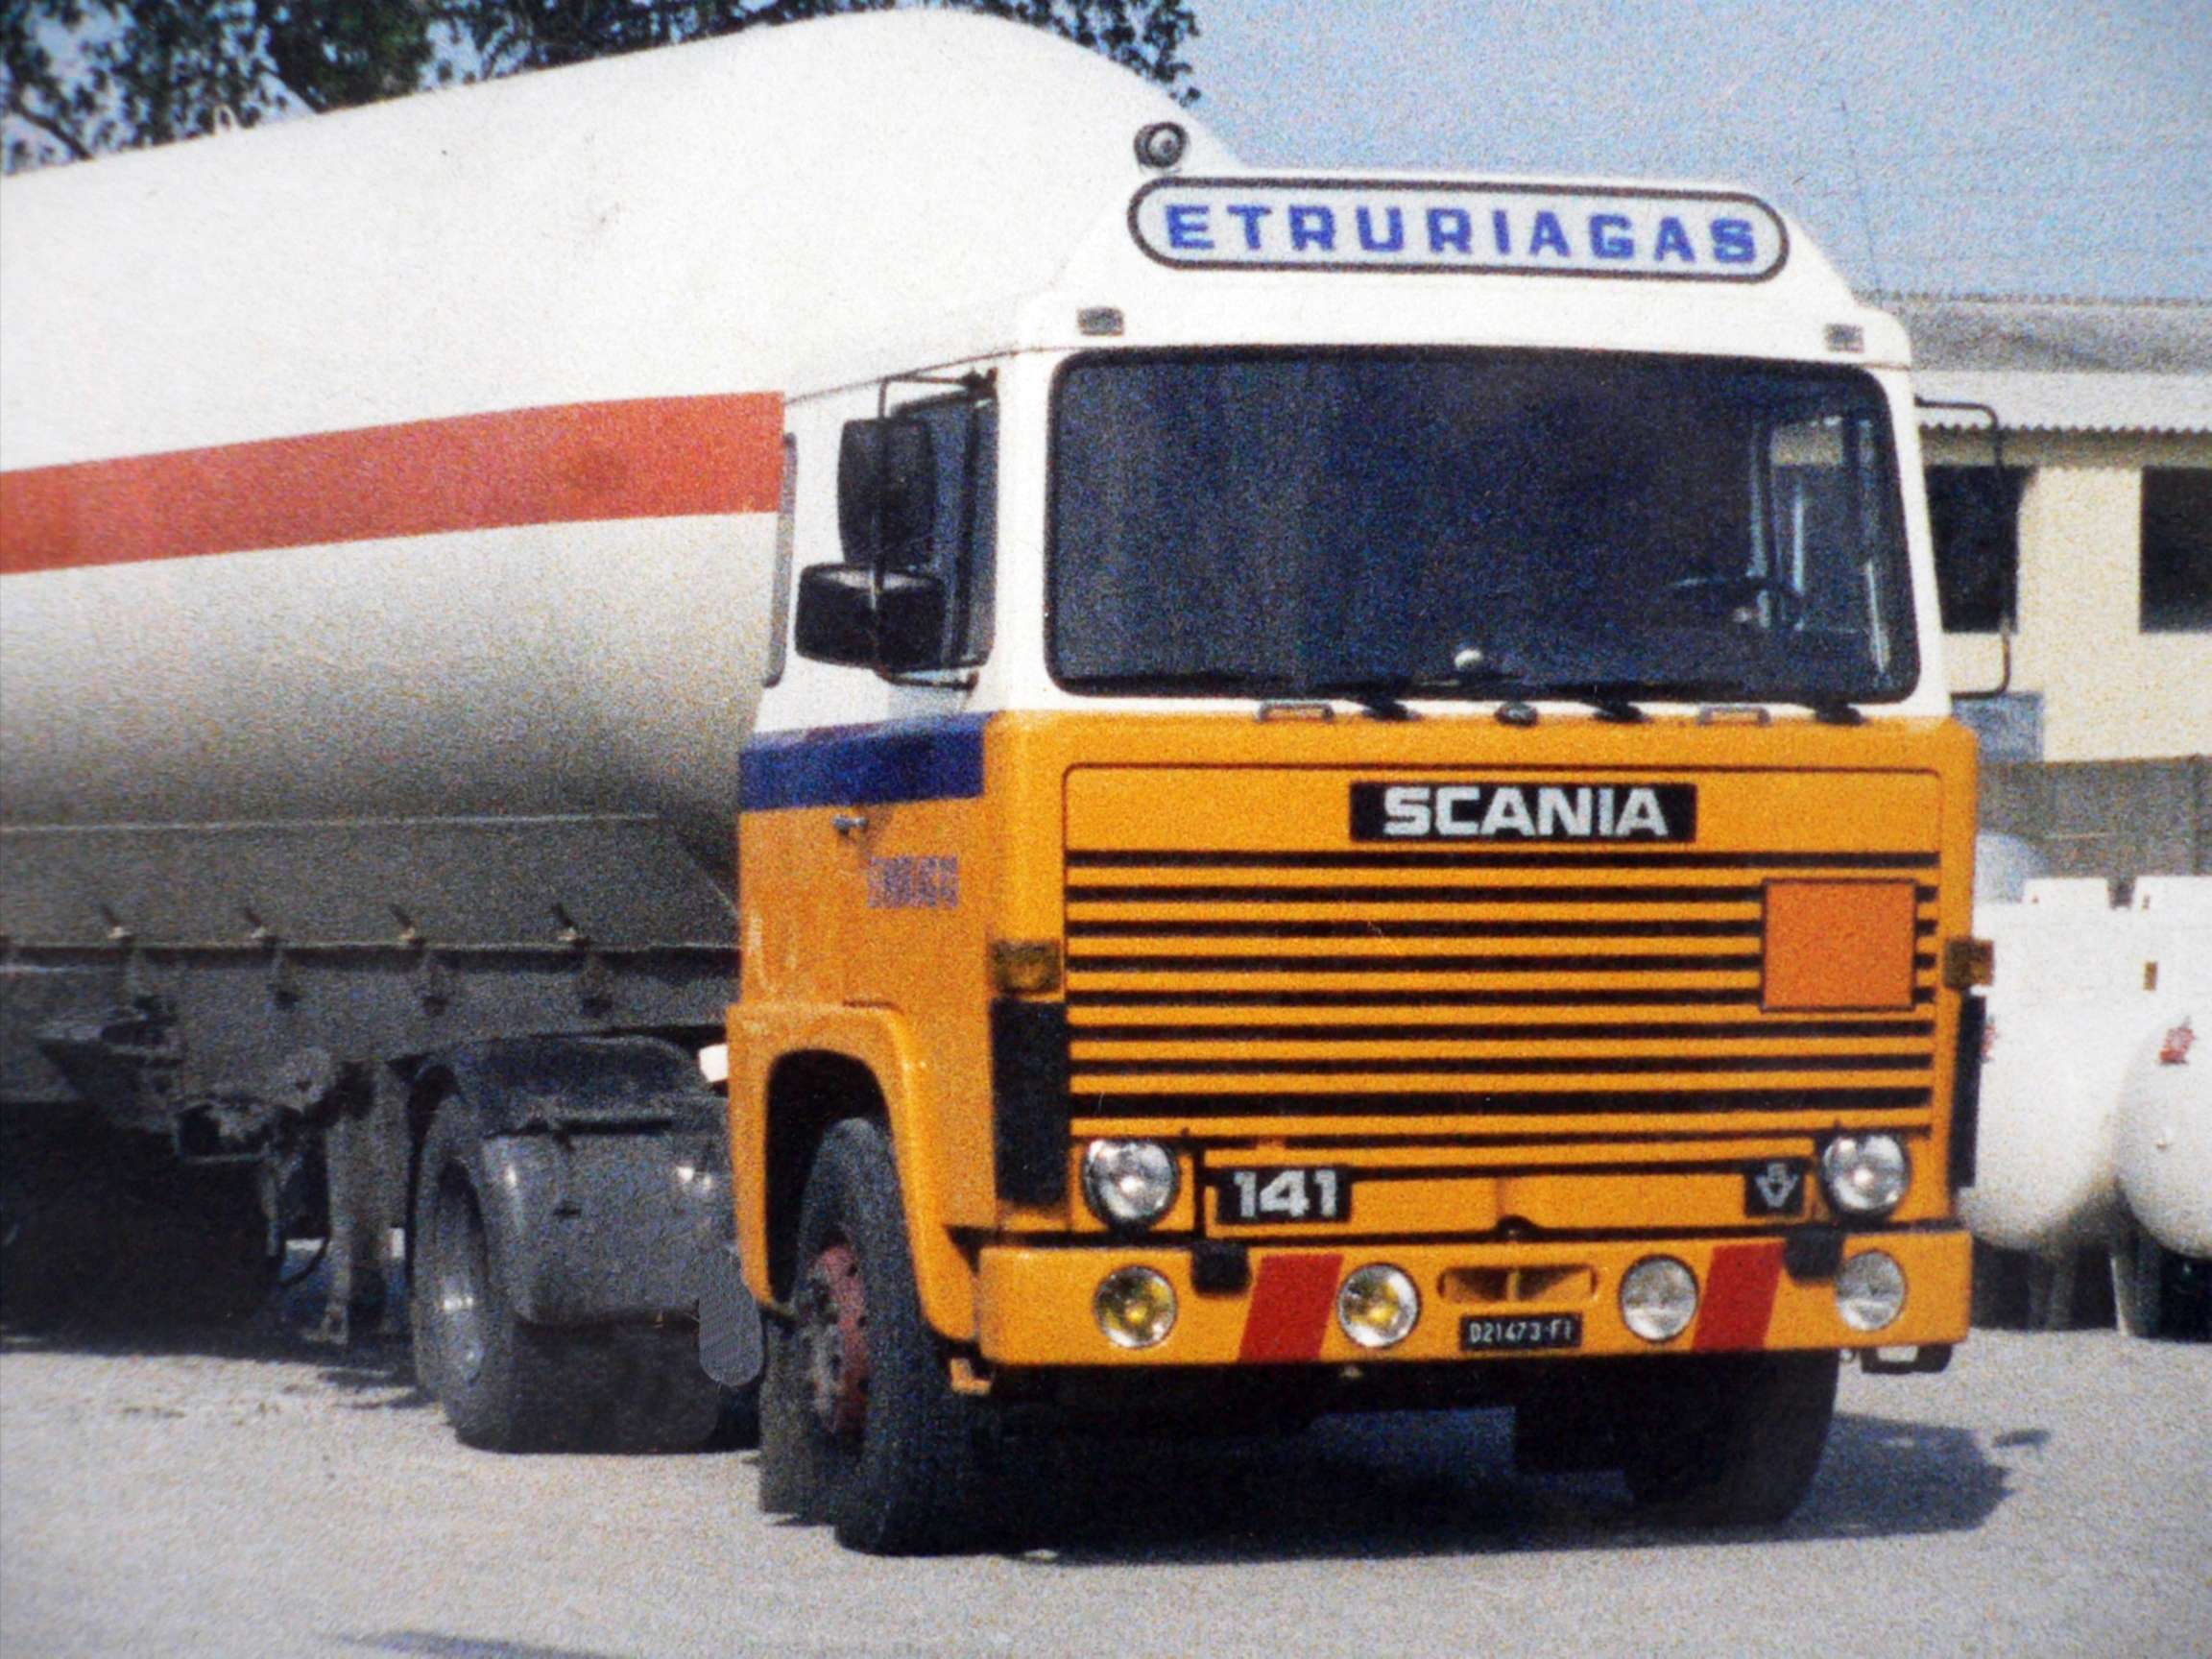 Scania 141 #8997911